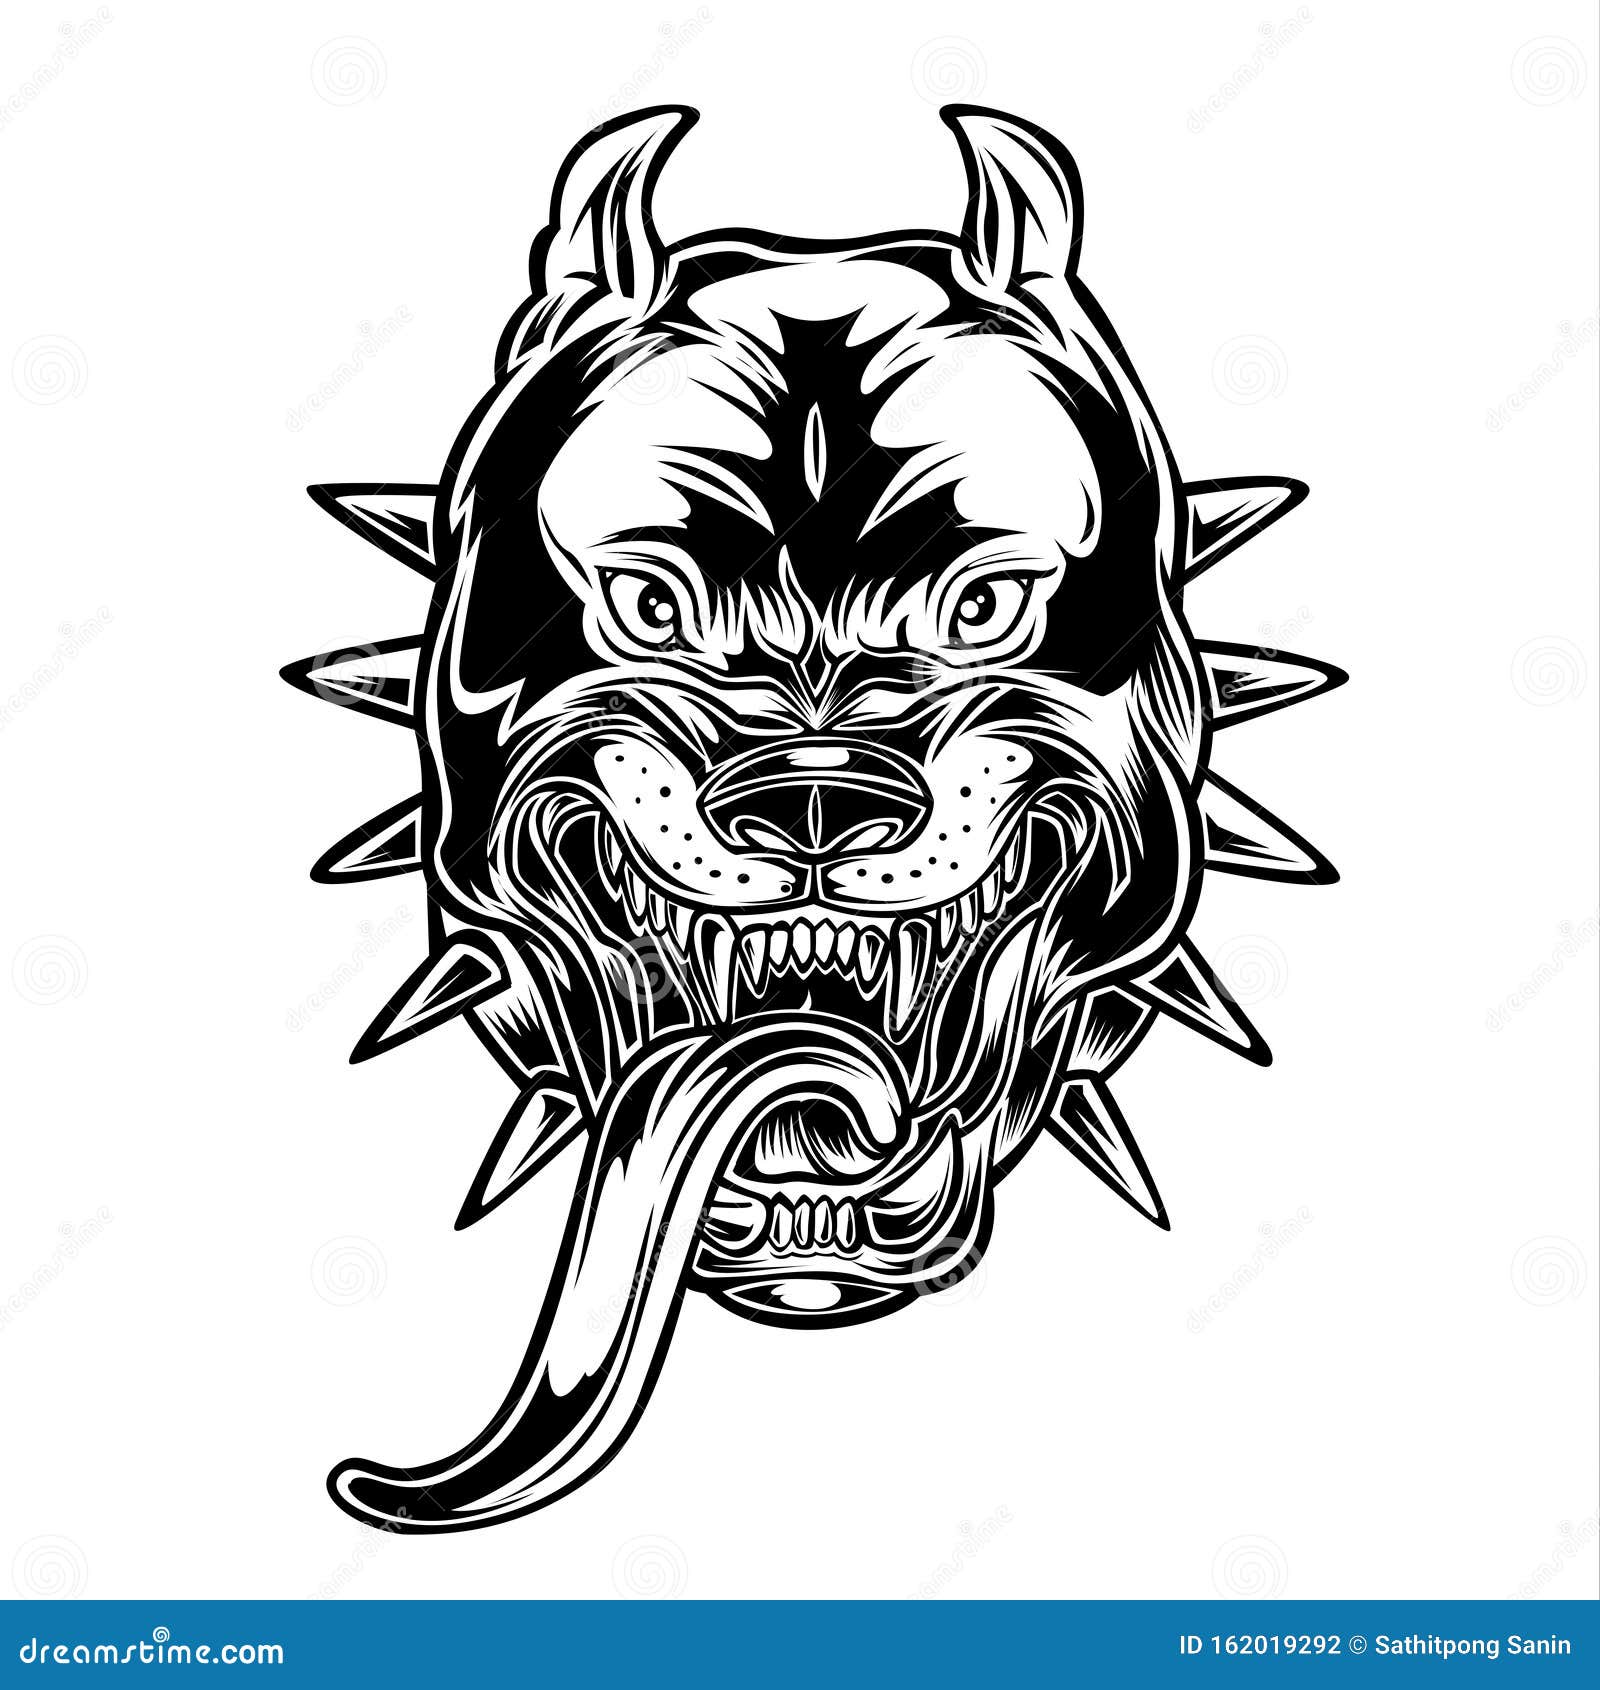 Angry Bulldog tattoo